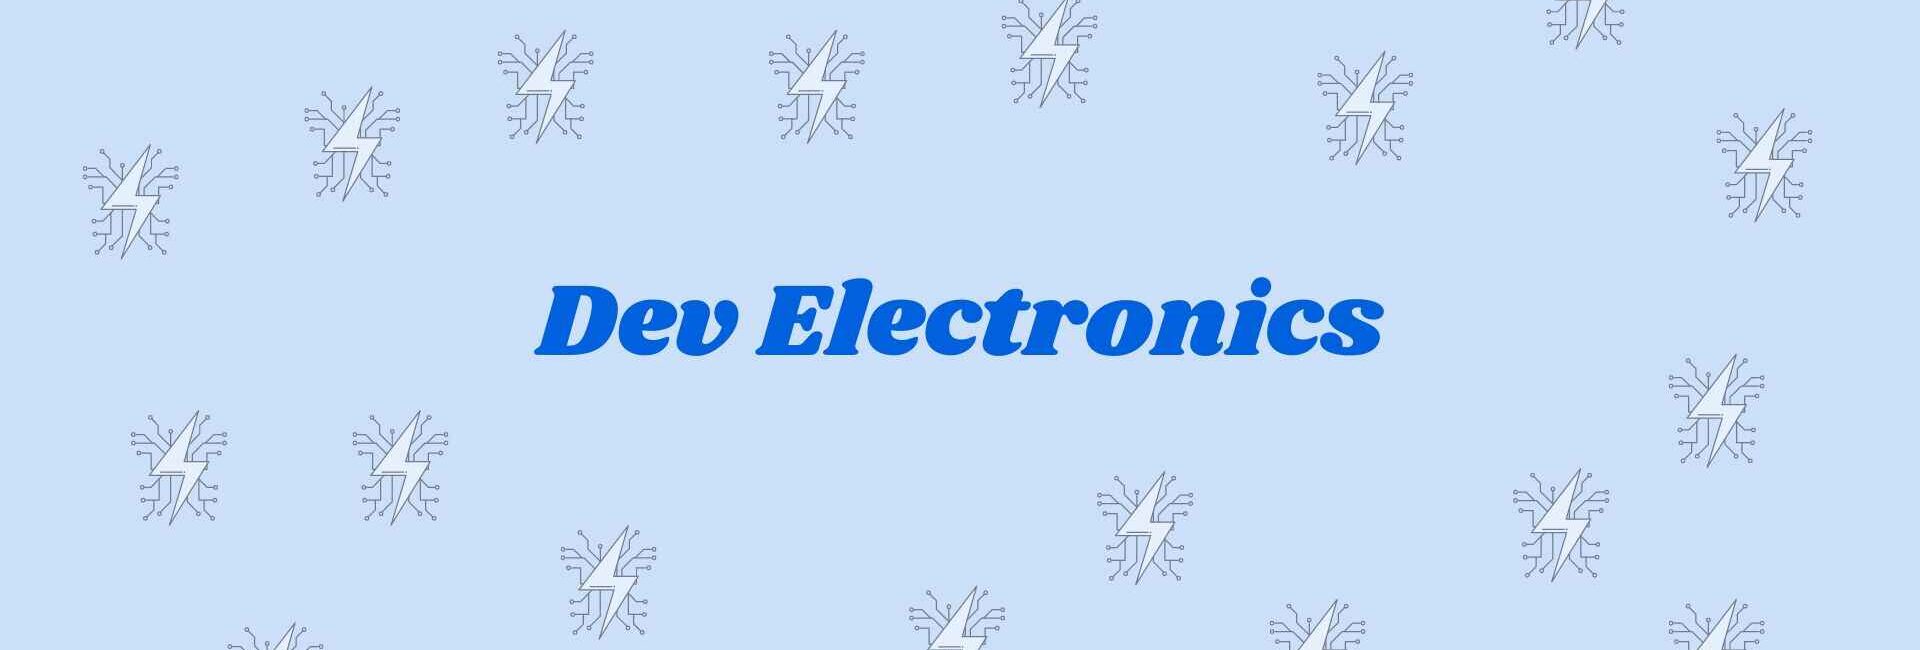 Dev Electronics - Electronics Goods Dealer in Noida